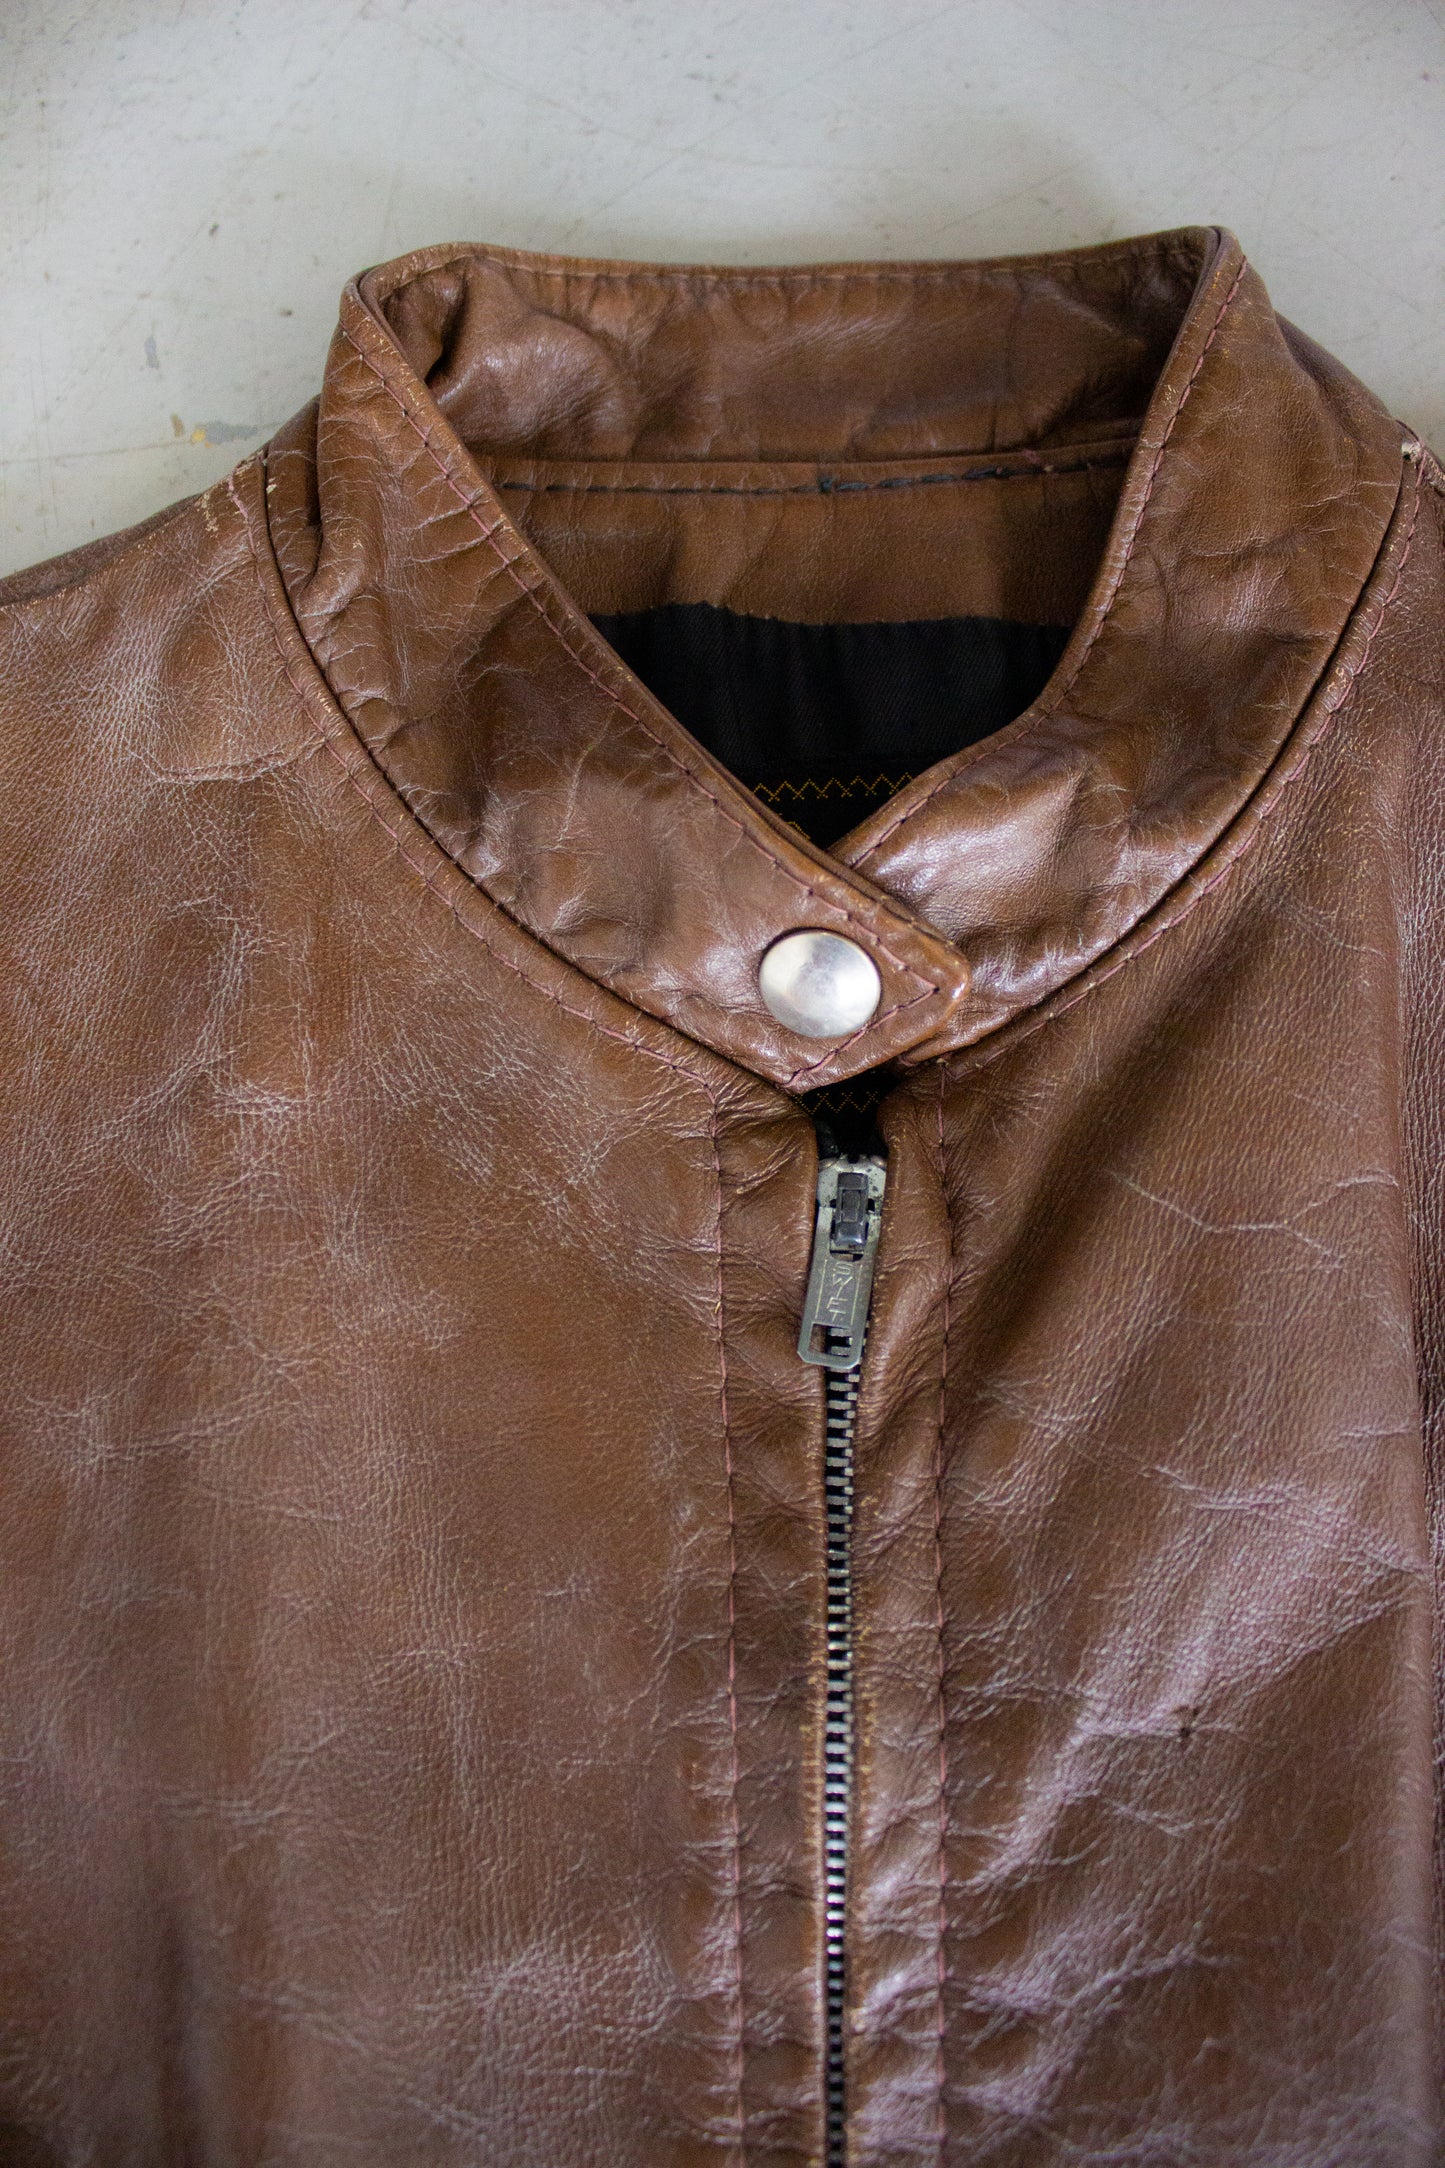 1960's Reed Sportswear Brown Leather Cafe Racer Motorcycle Jacket (Medium)